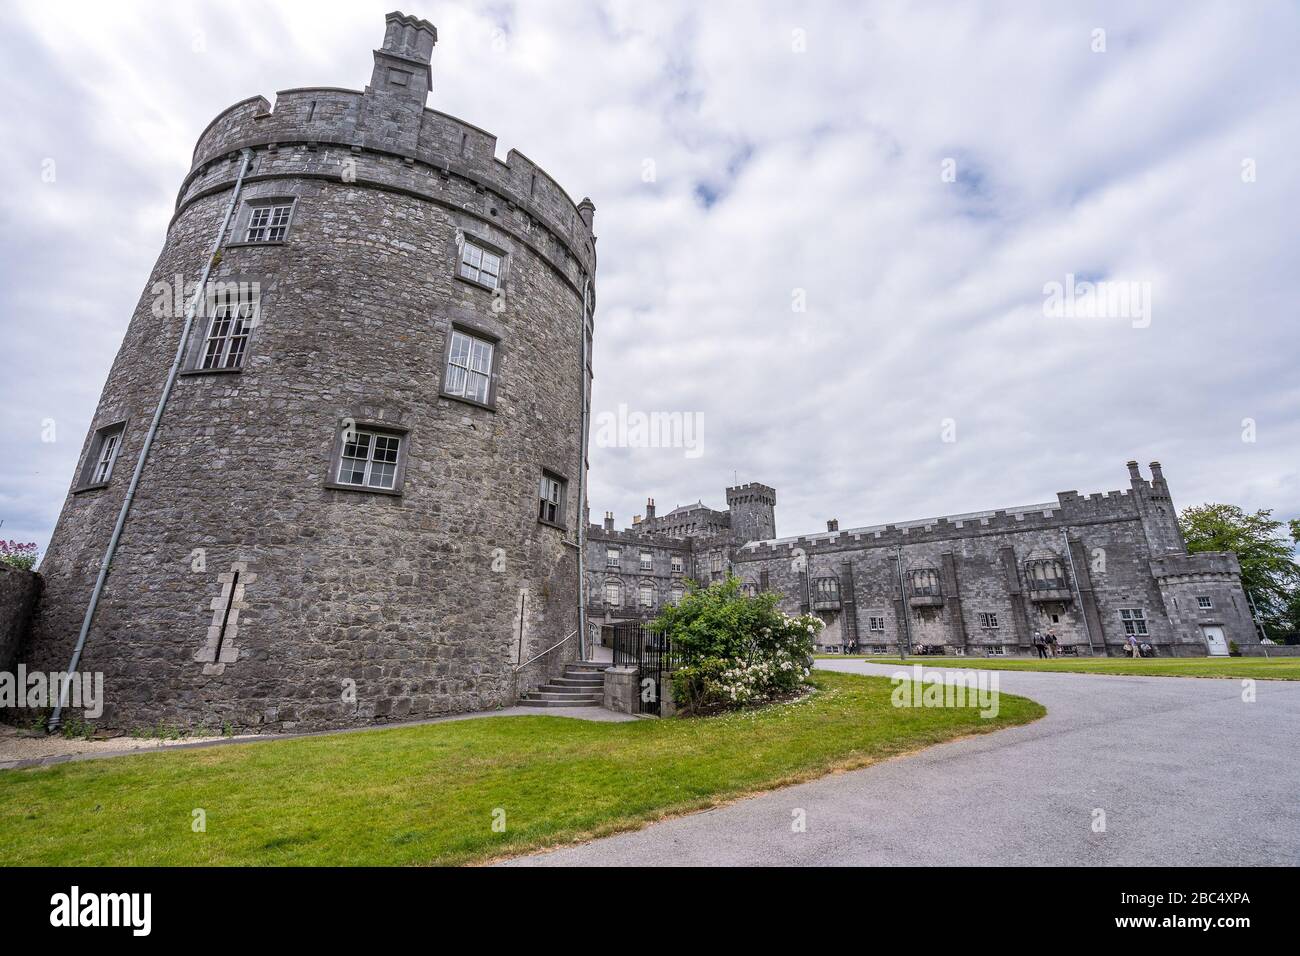 Kilkenny, Ireland - Kilkenny Castle - a popular tourist attraction Stock Photo